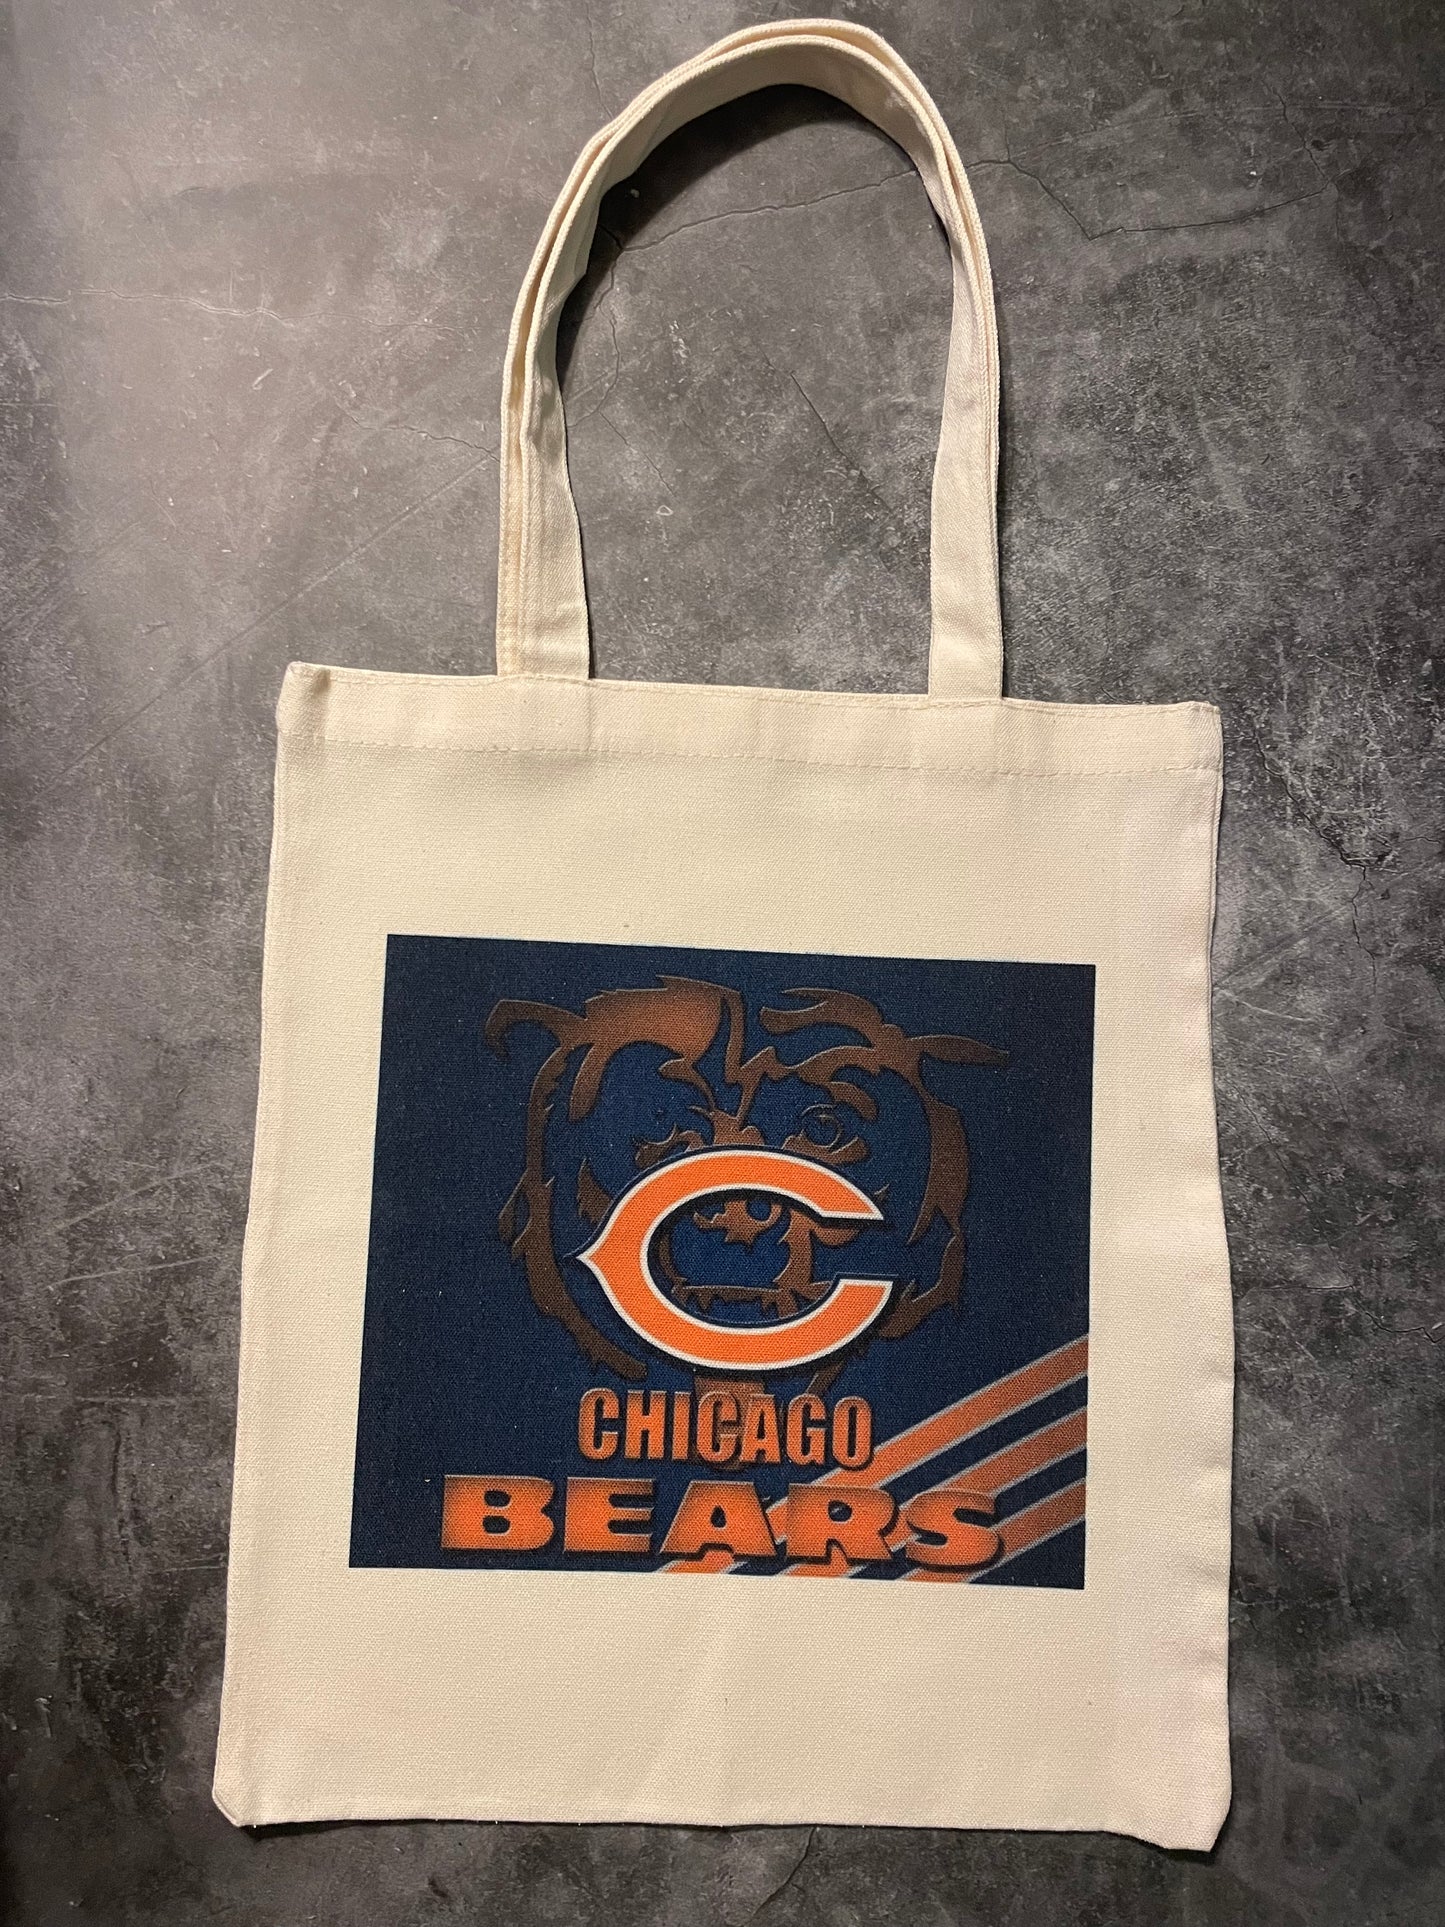 Custom Made Chicago Bears Tote, Chicago Bears, Customized Tote, Personalized Tote, Customized Bags, Personalized Bags